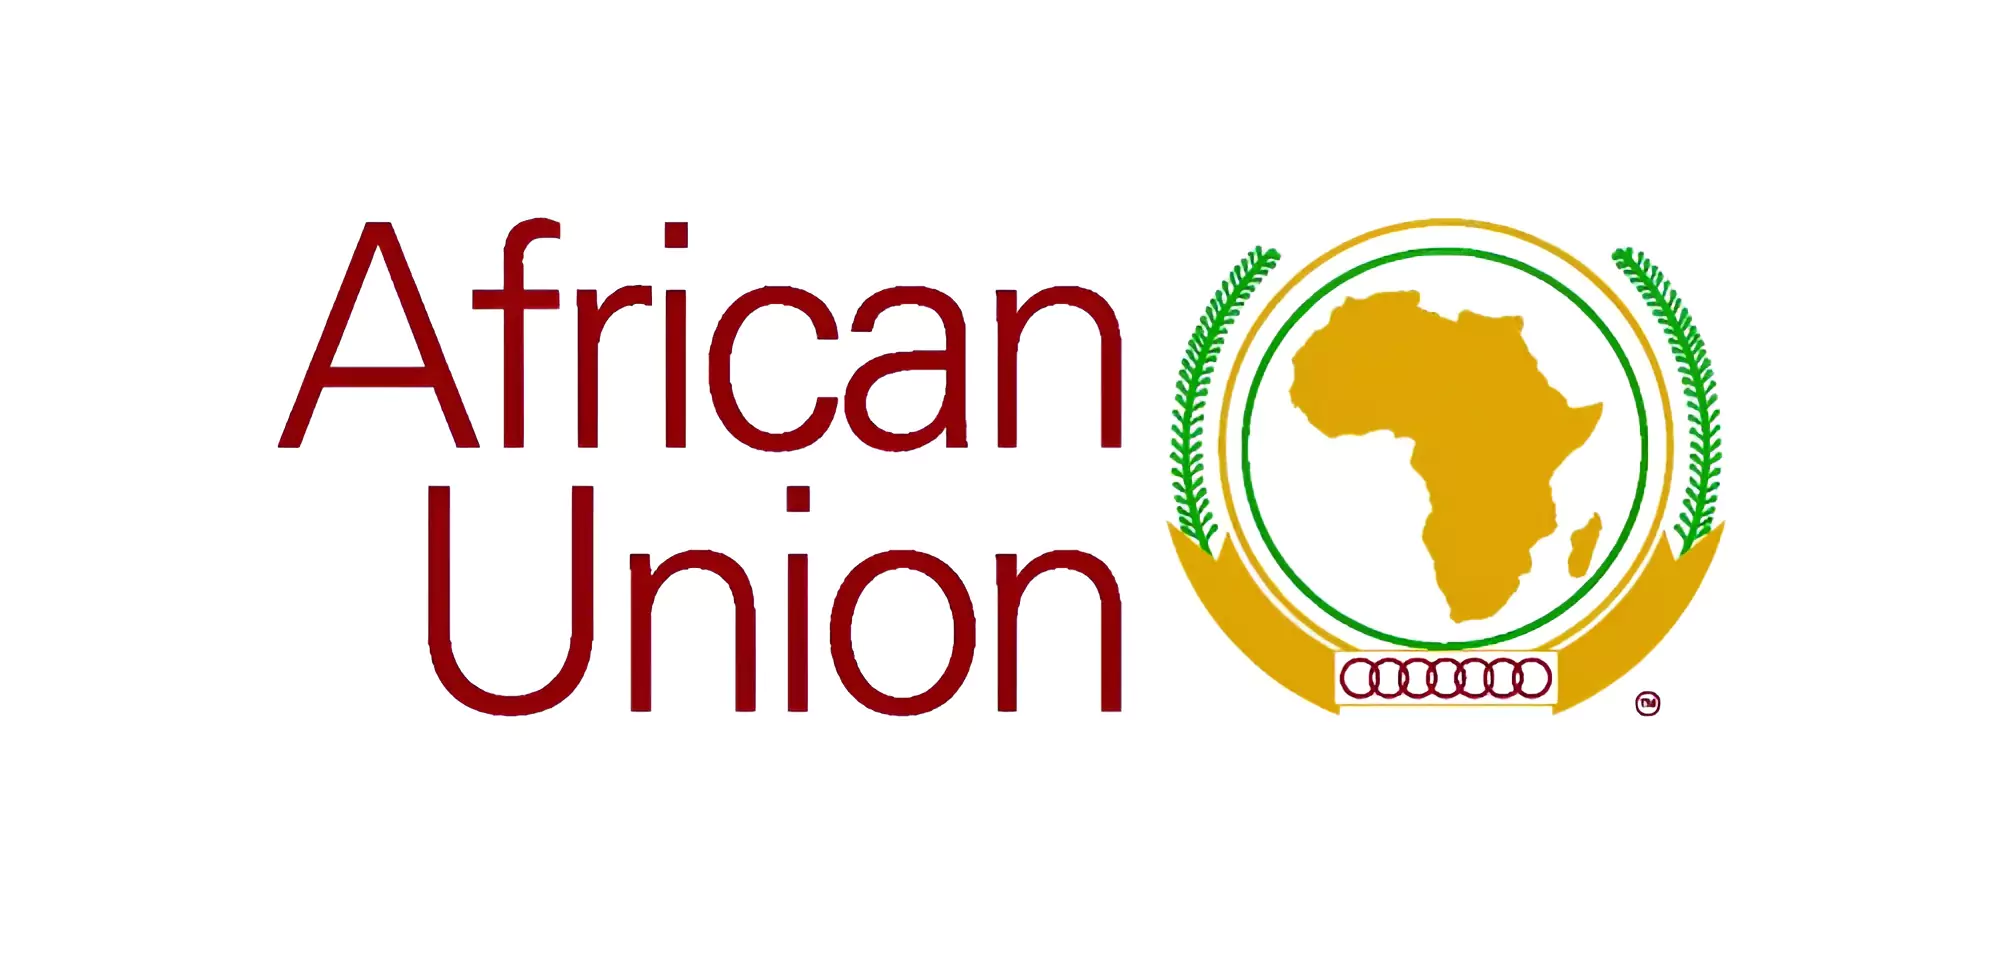 African Union Summit
